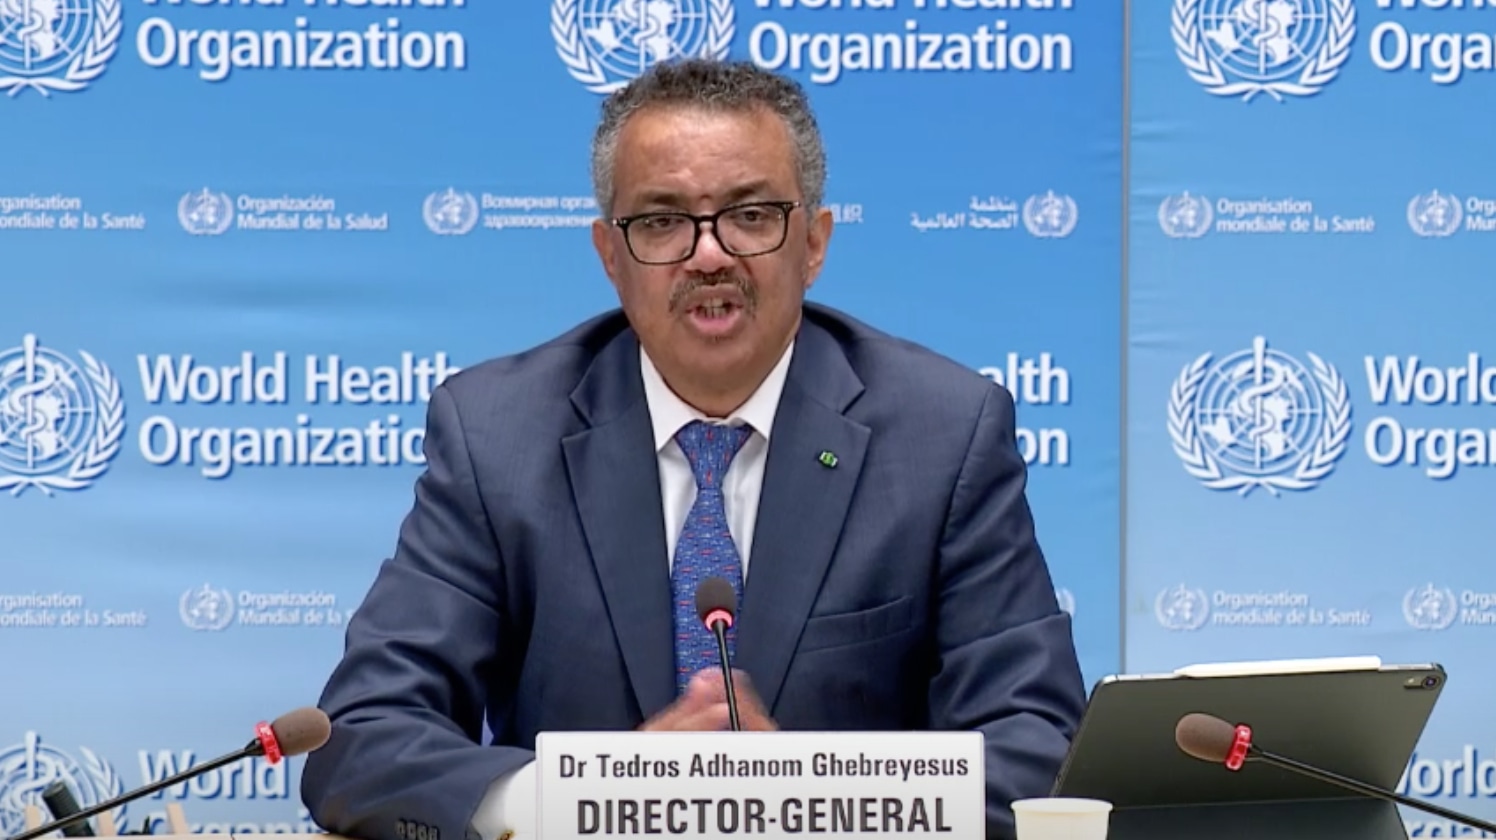 WHO Director-General Tedros Adhanom Ghebreyesus speaks at a press conference Monday, August 3, 2020 in Geneva, Switzerland. (WHO/Screenshot)